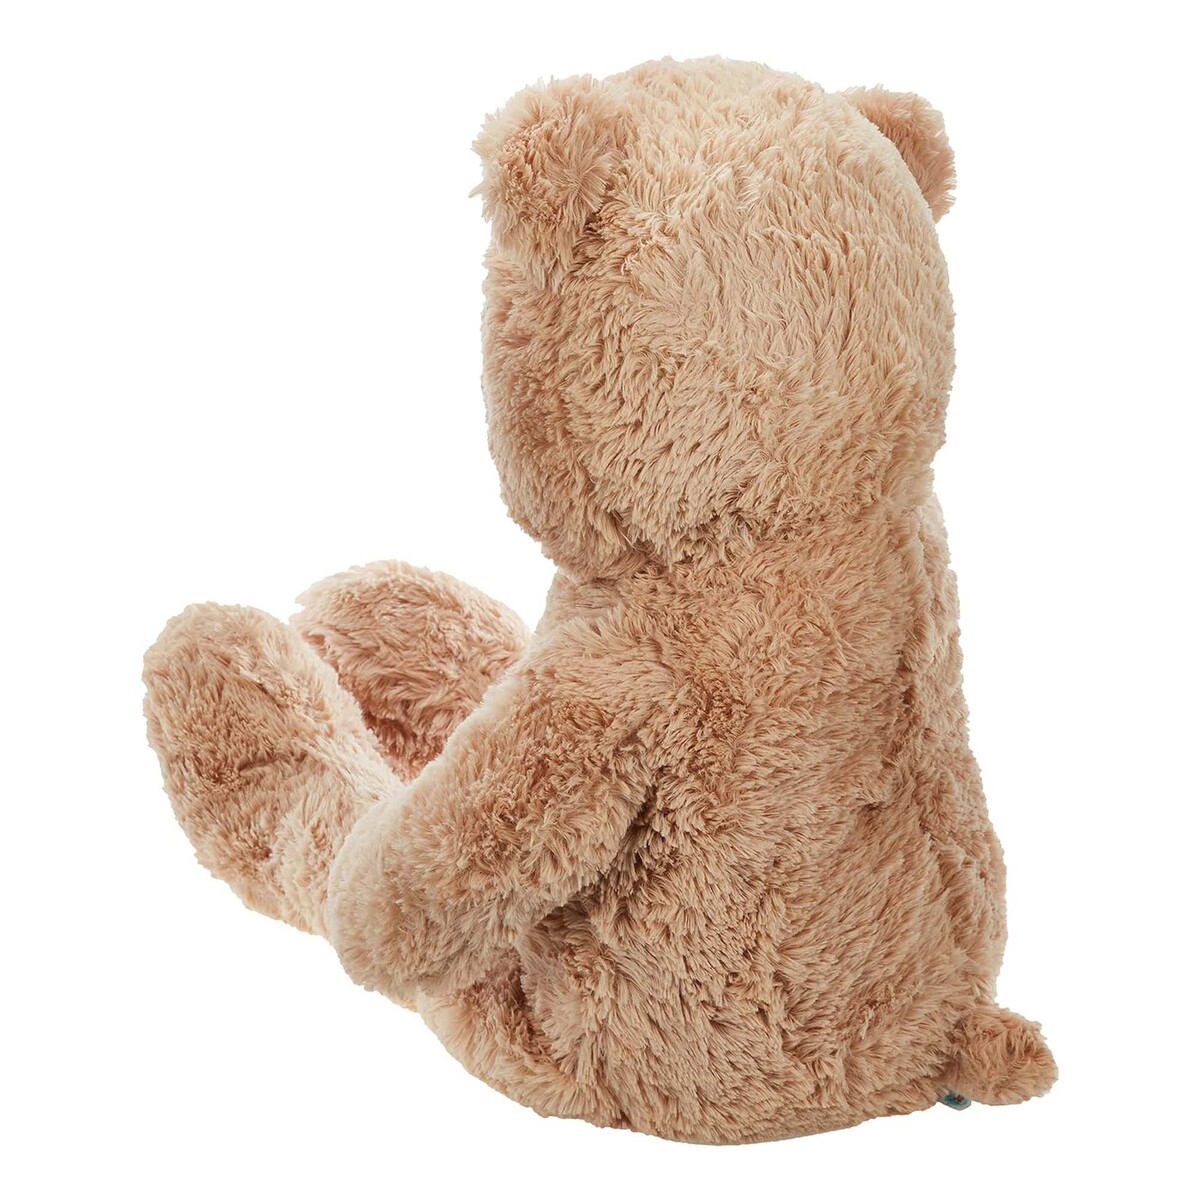 Nicotoy Beige Bear, 100 cm, 6305810010